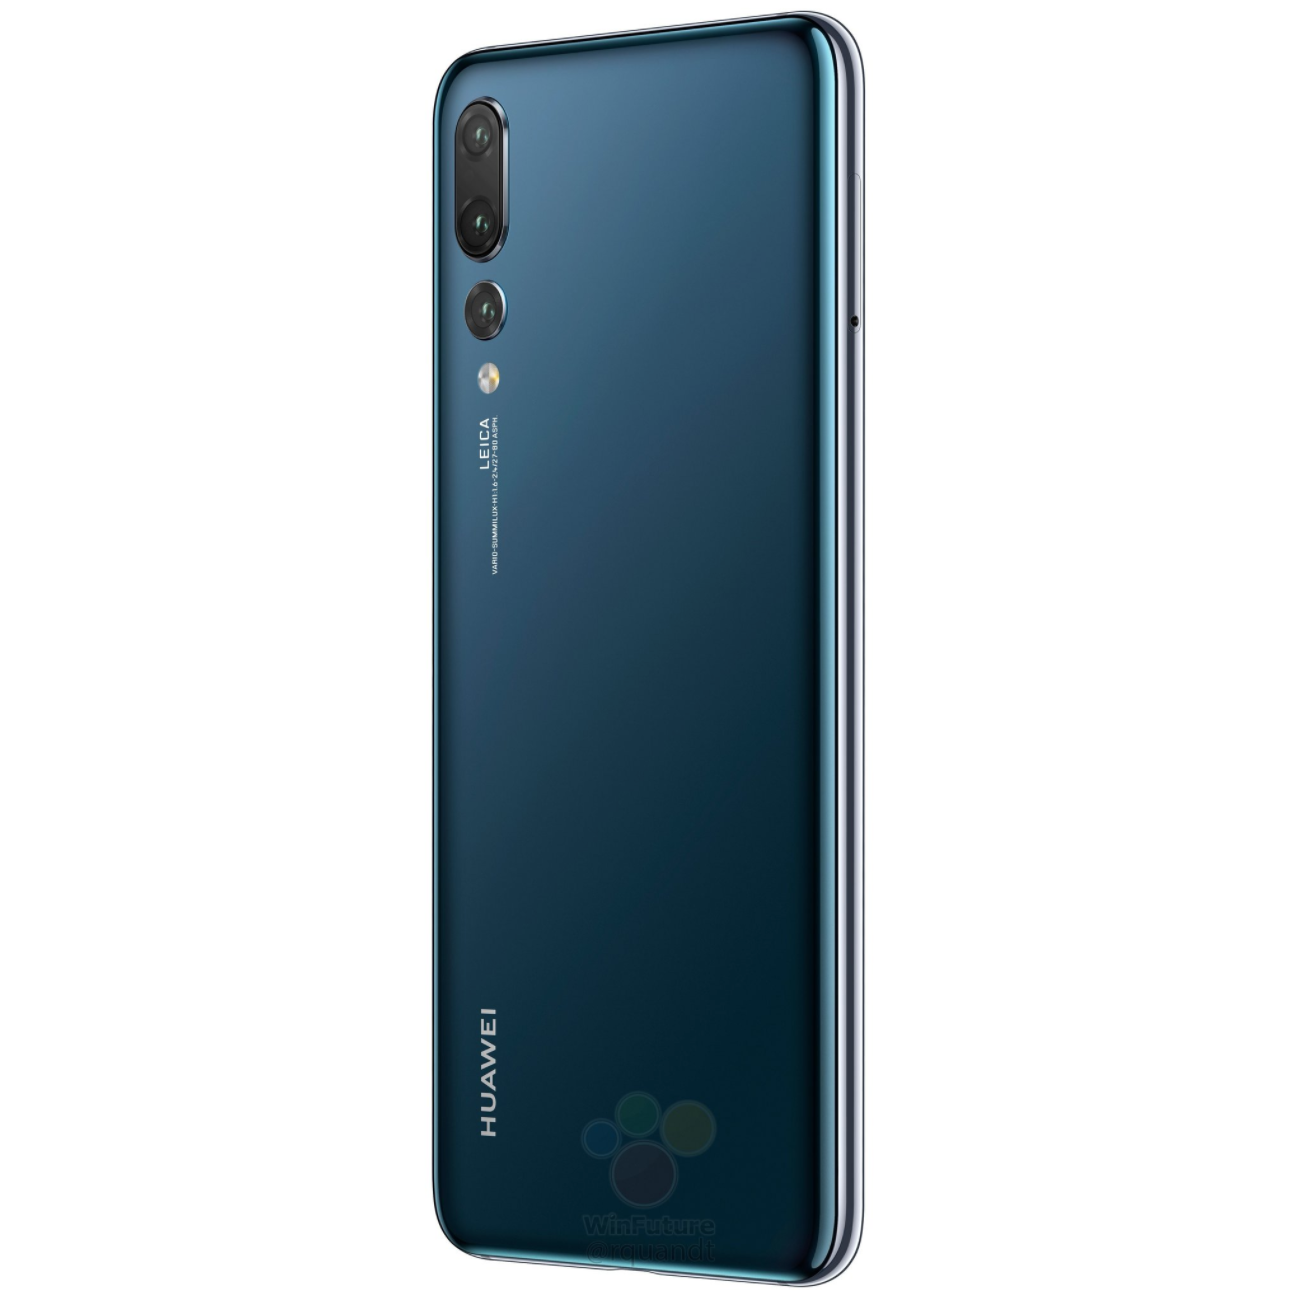 Huawei P20 Pro Press Release SpecPhone 00003